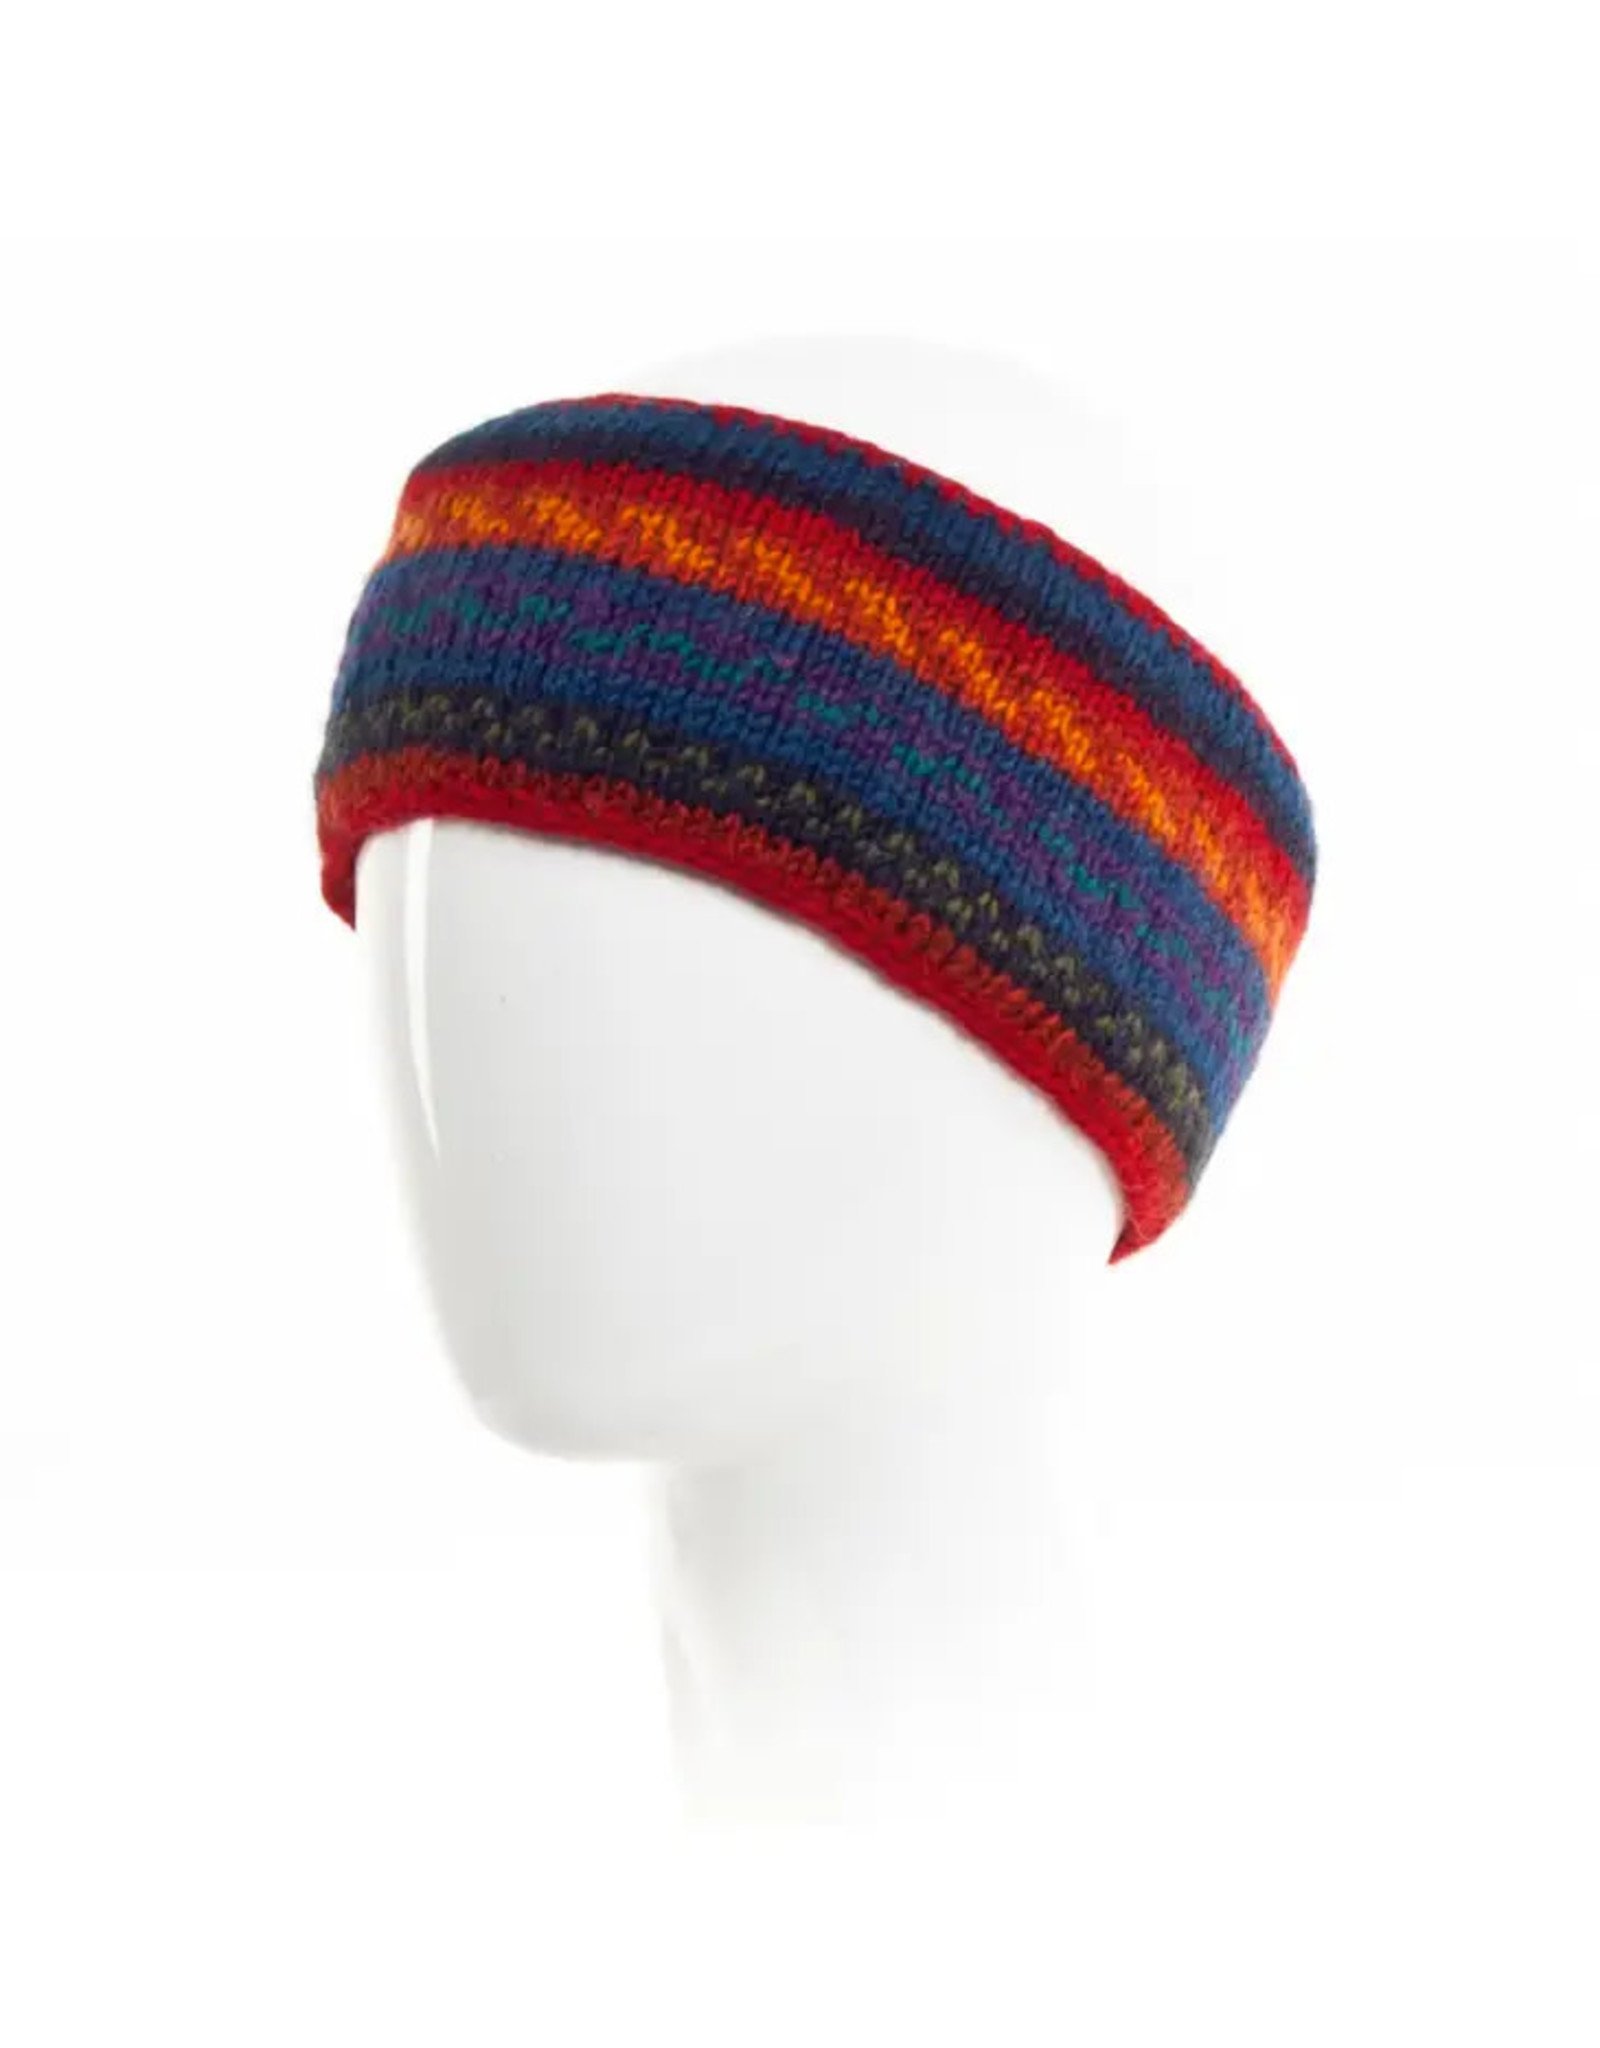 Lost Horizons Aruna Wool Headband (Red)